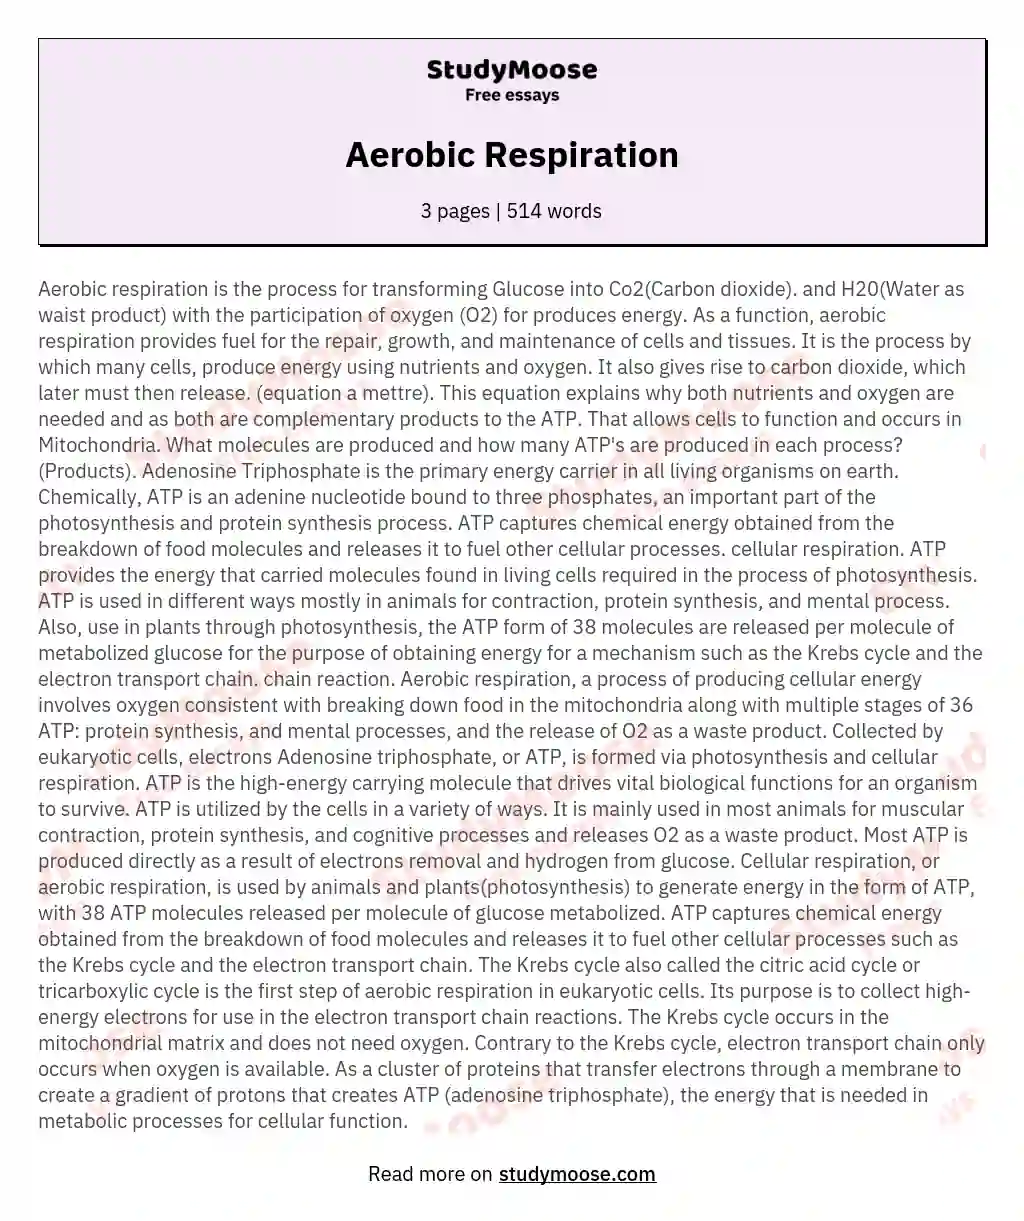 Aerobic Respiration essay